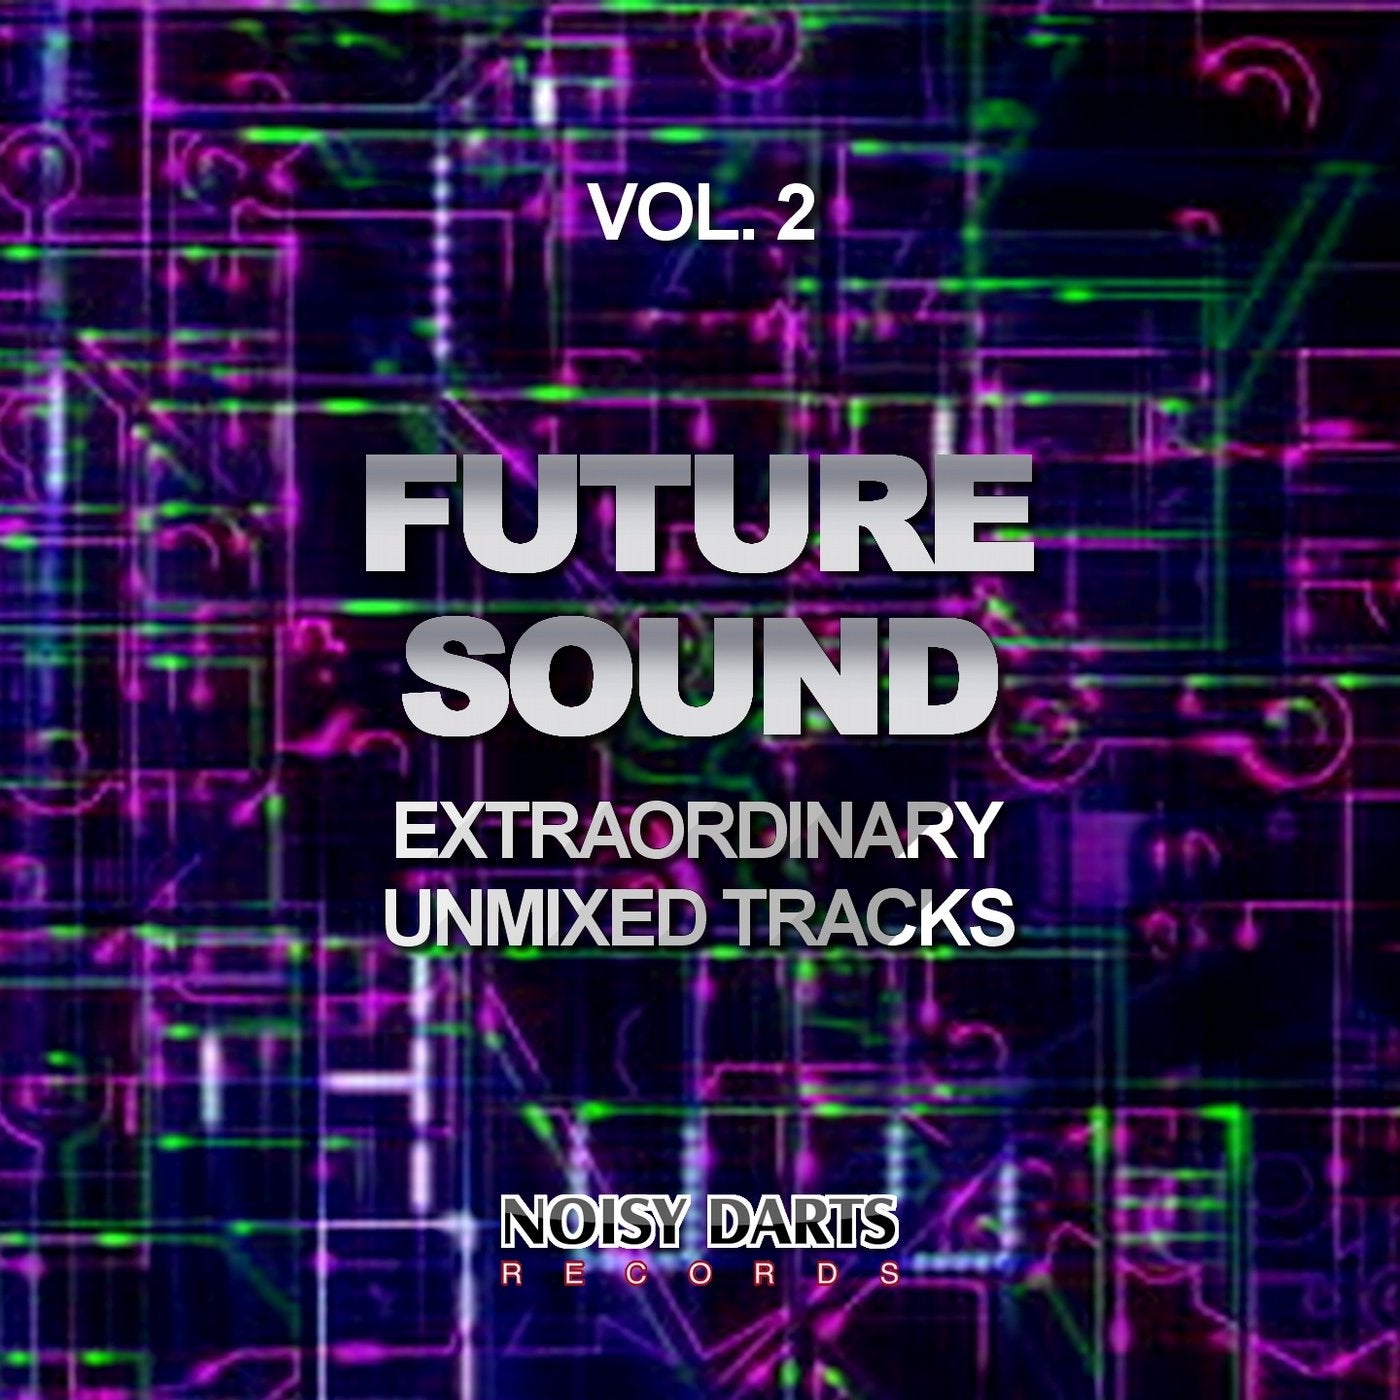 Future Sound, Vol. 2 (Extraordinary Unmixed Tracks)